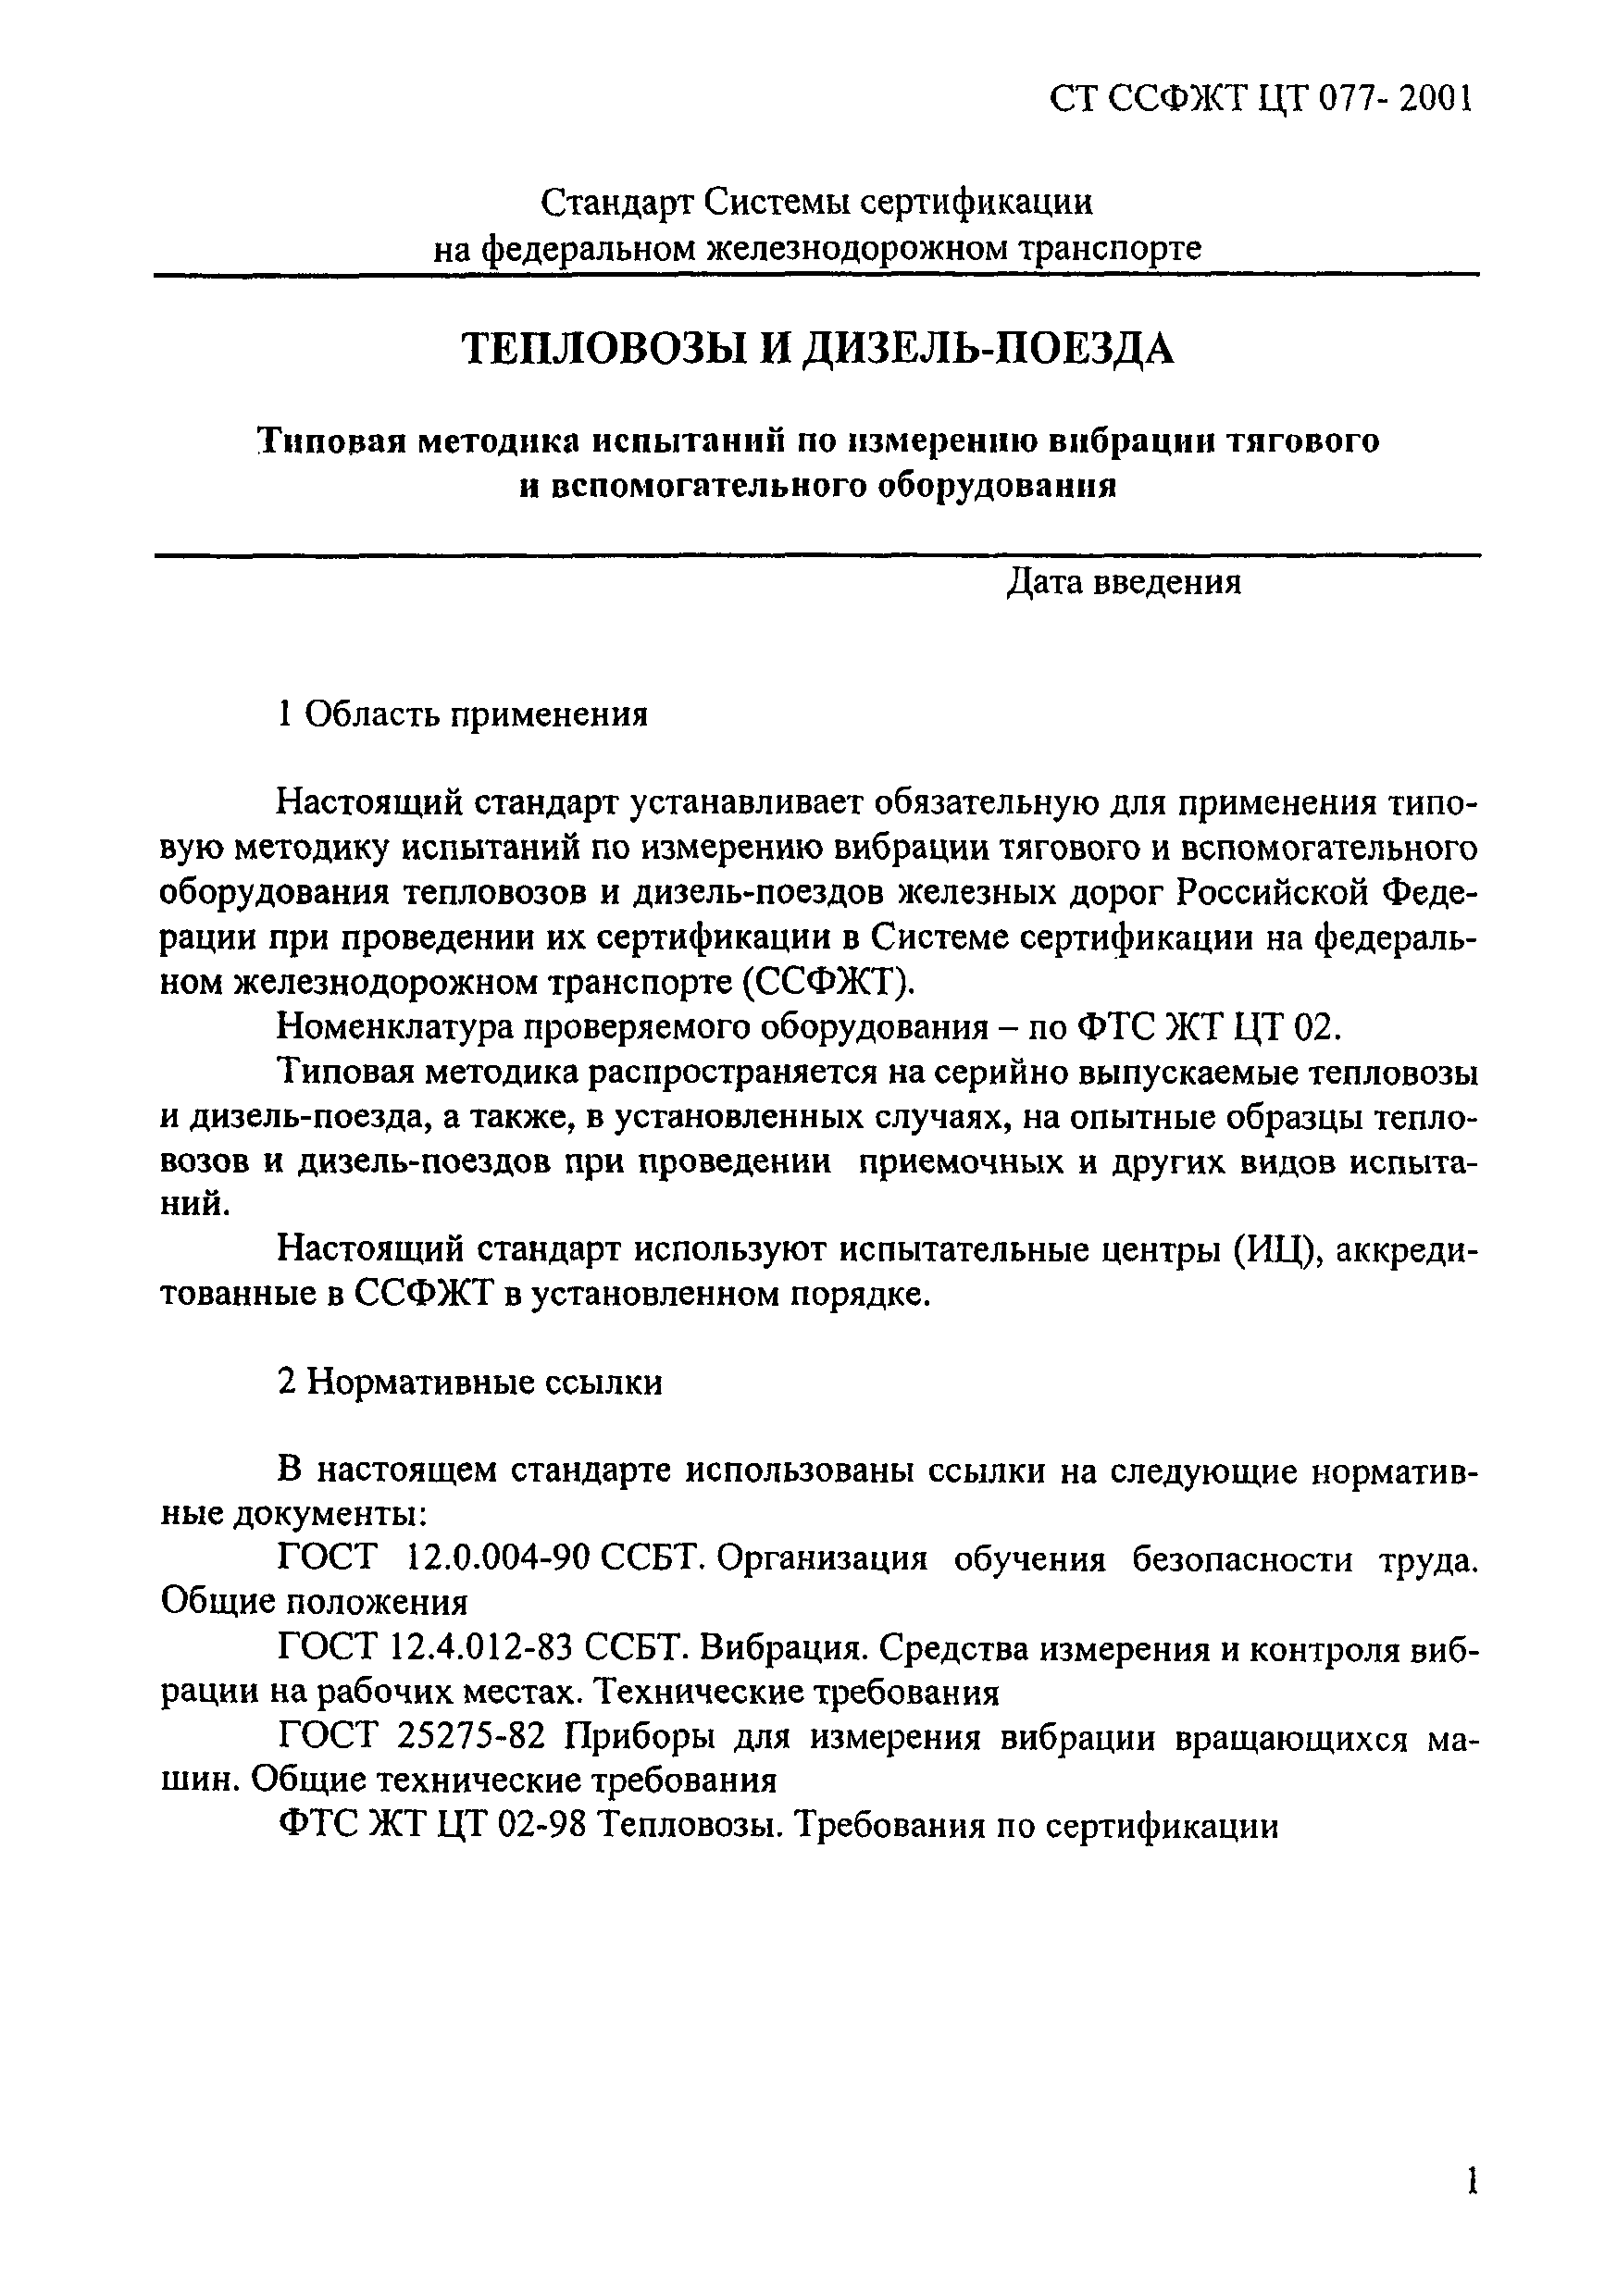 СТ ССФЖТ ЦТ 077-2001